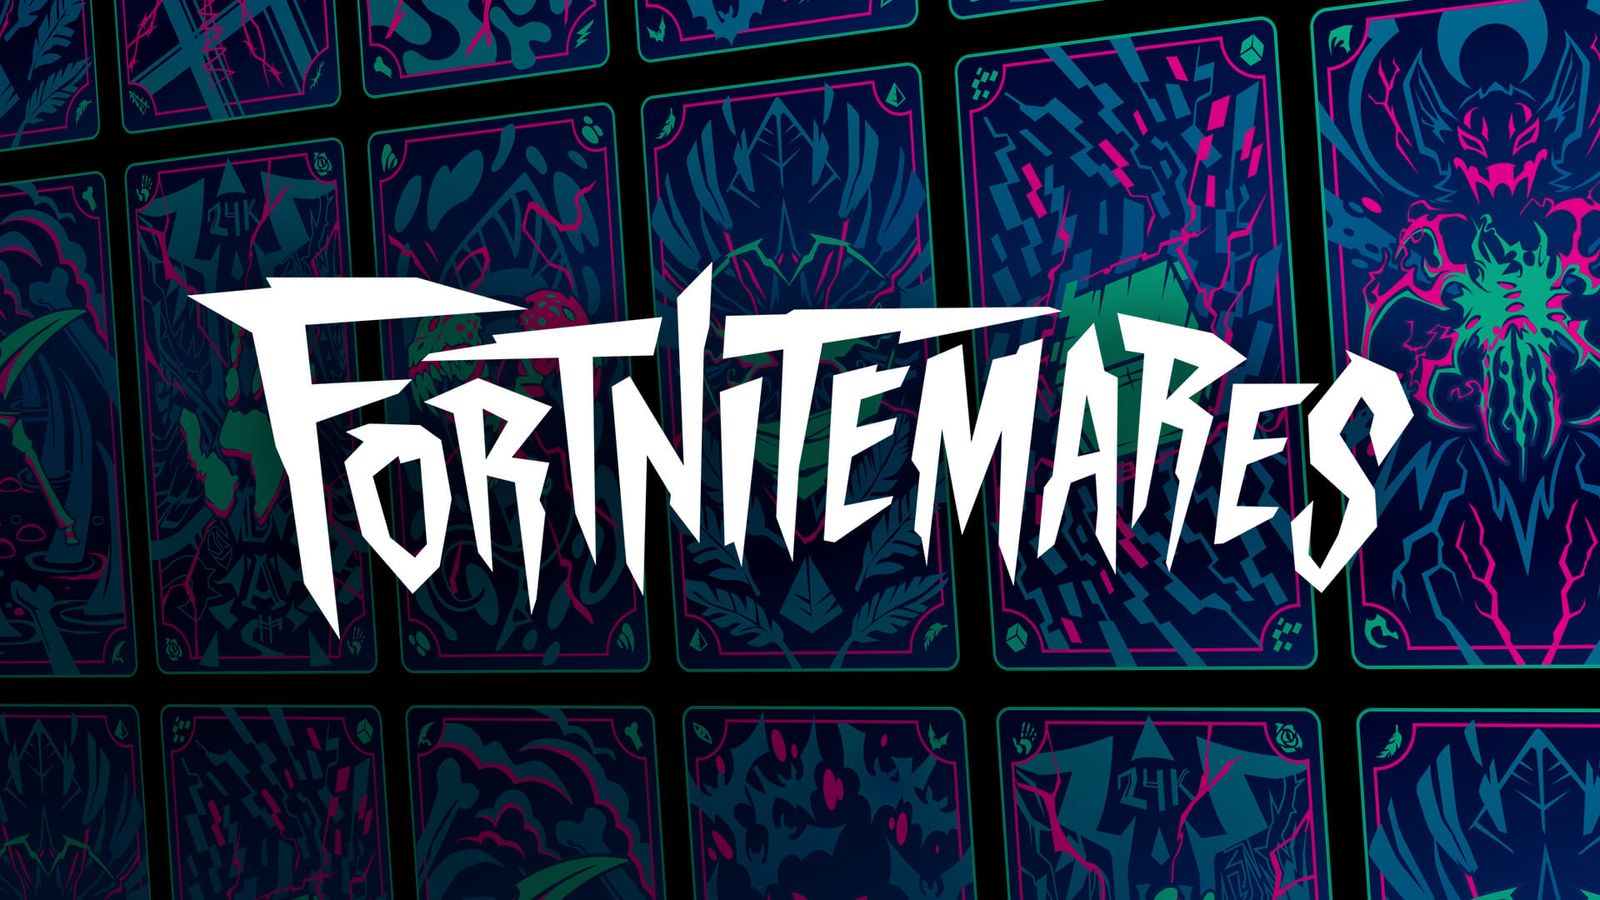 Fortnitemares is returning to Fortnite in 2022